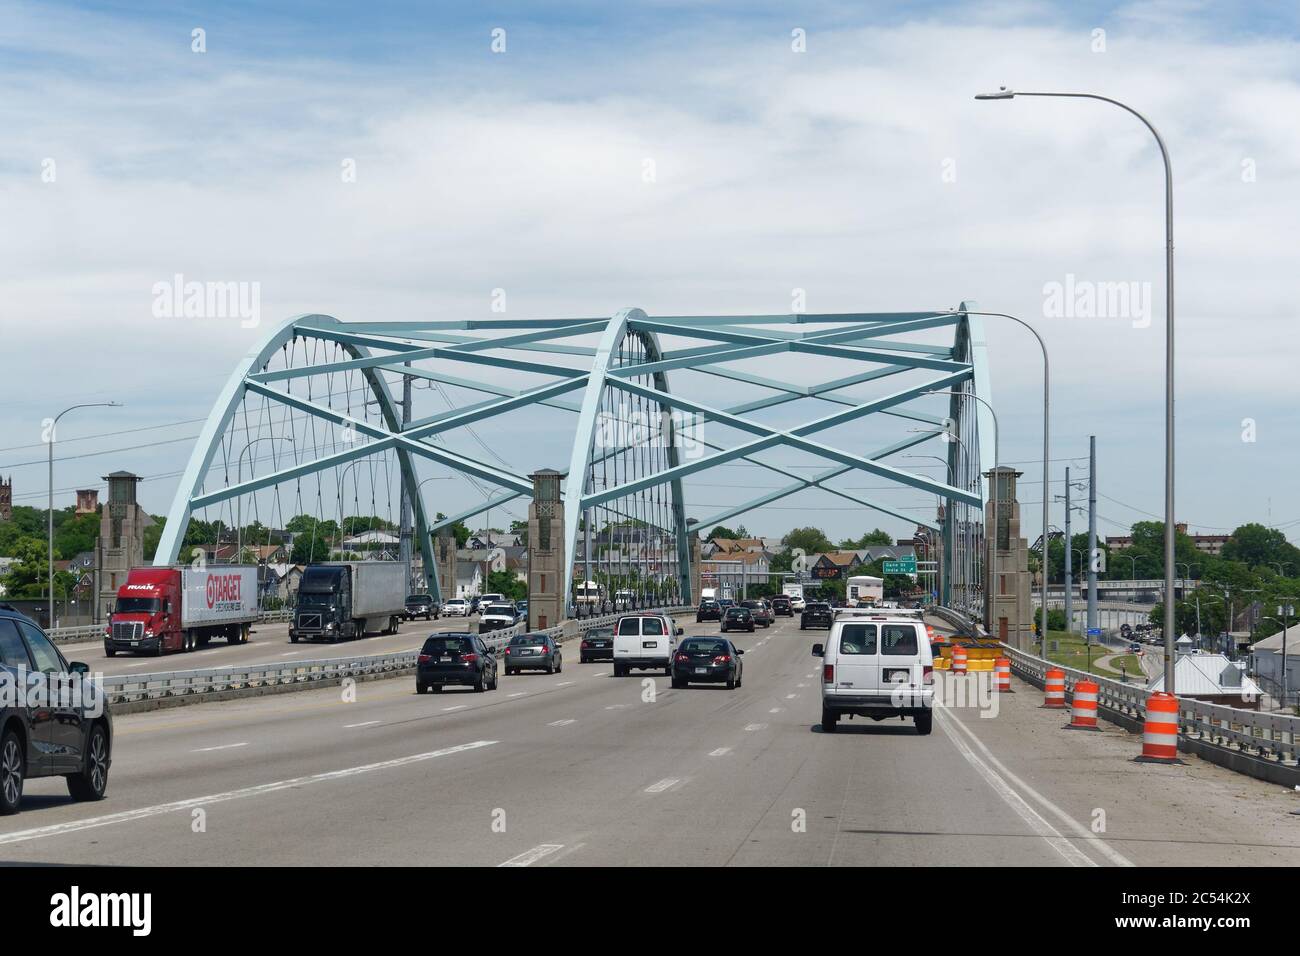 Providence, Rhode Island - 10. Juni 2019: Die Providence River Bridge ist Teil eines 610 Millionen Dollar teuren Projekts namens IWAY. Stockfoto